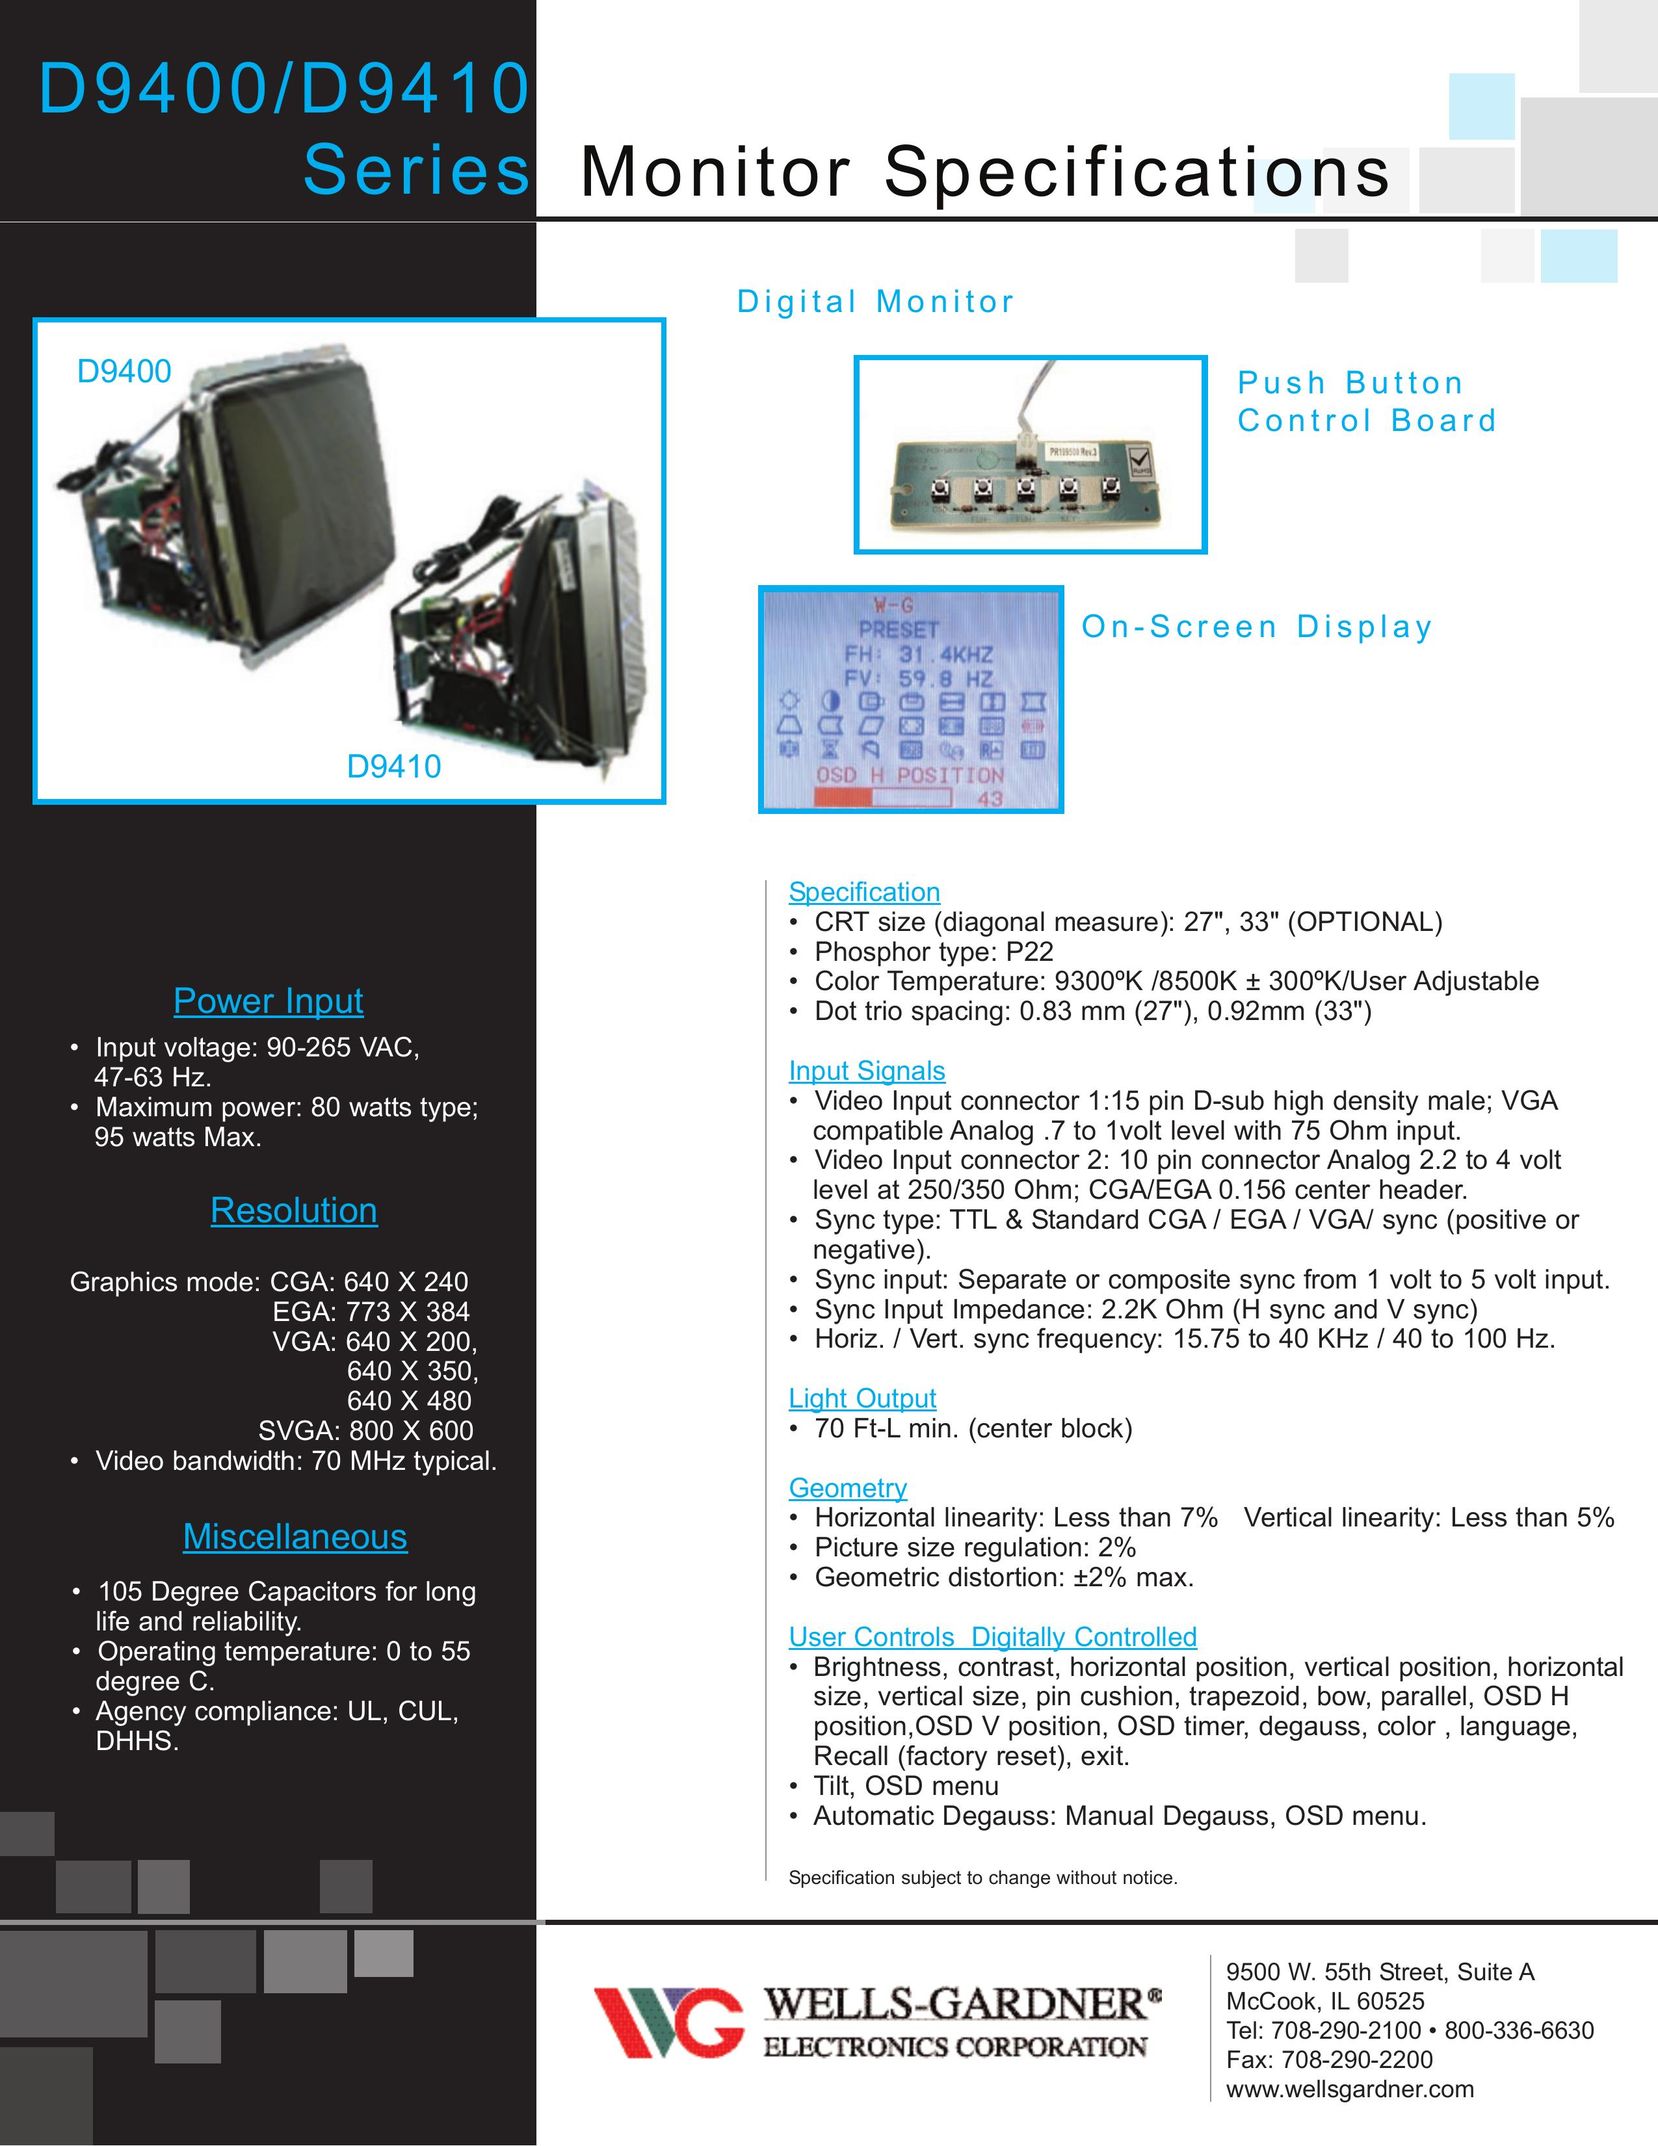 Wells-Gardner D9400 Computer Monitor User Manual